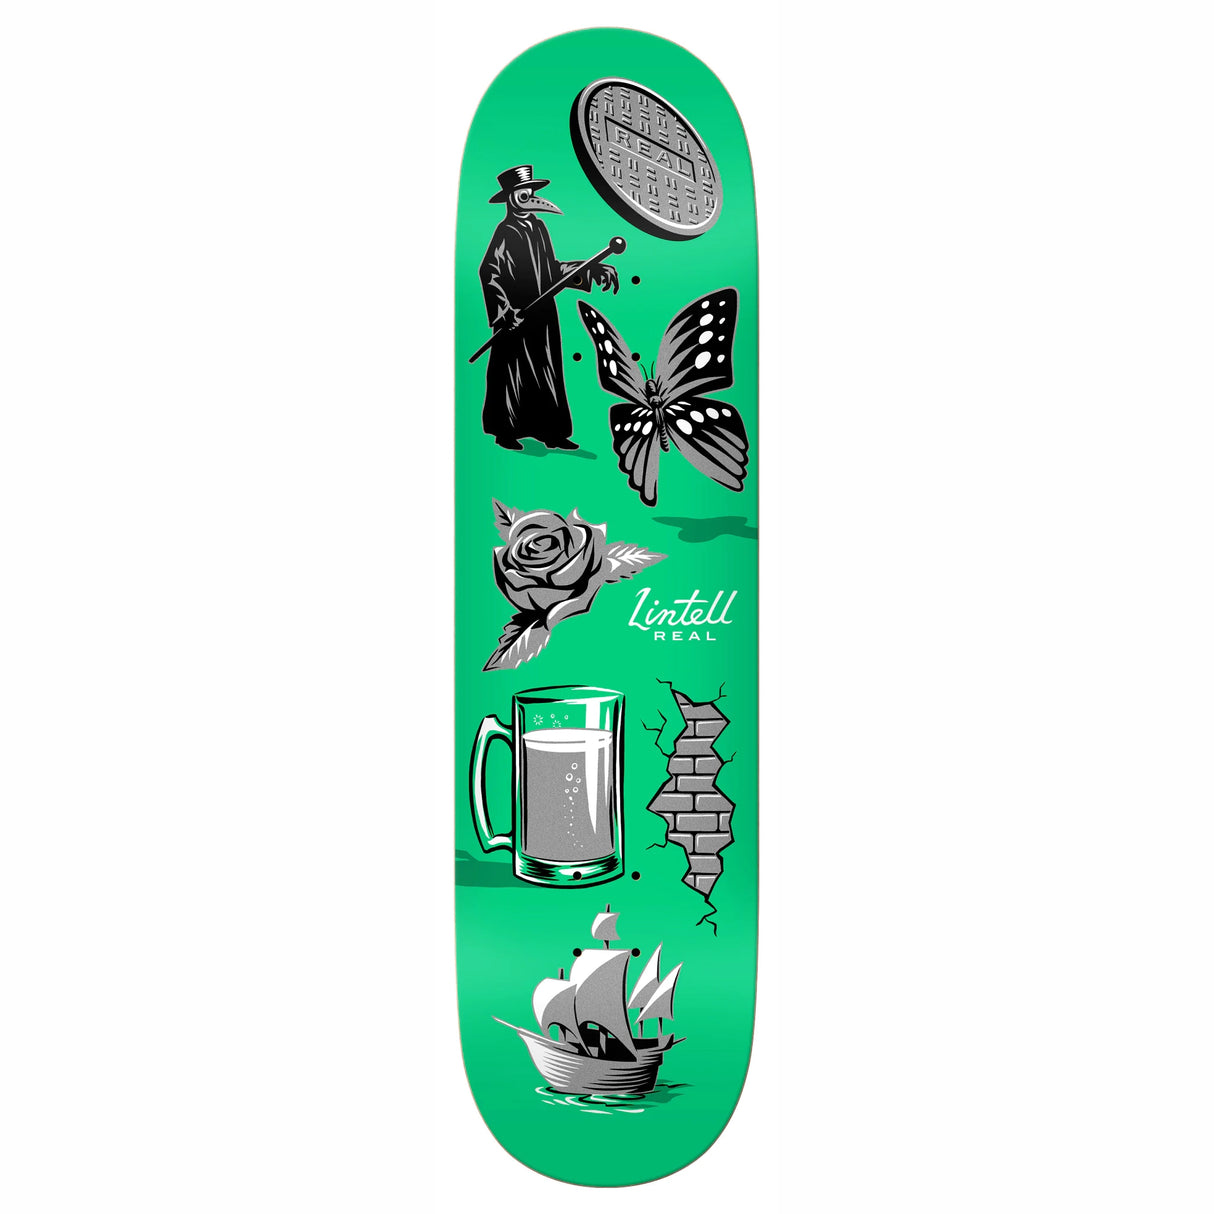 Real Lintell Revealing 8.28" Skateboard Deck